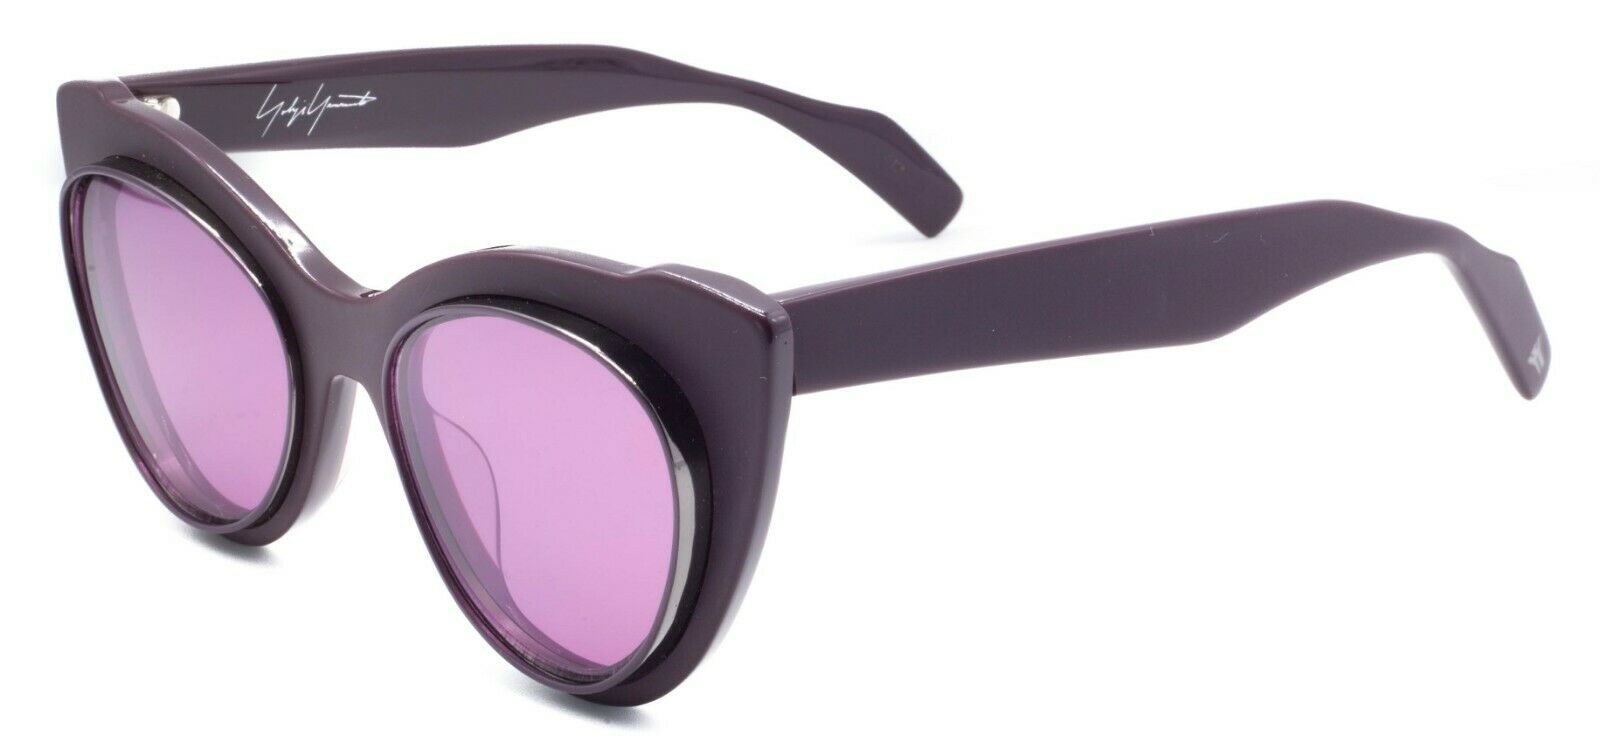 YOHJI YAMAMOTO YY7021 771 52mm Purple Sunglasses Eyewear Shades Frames - France